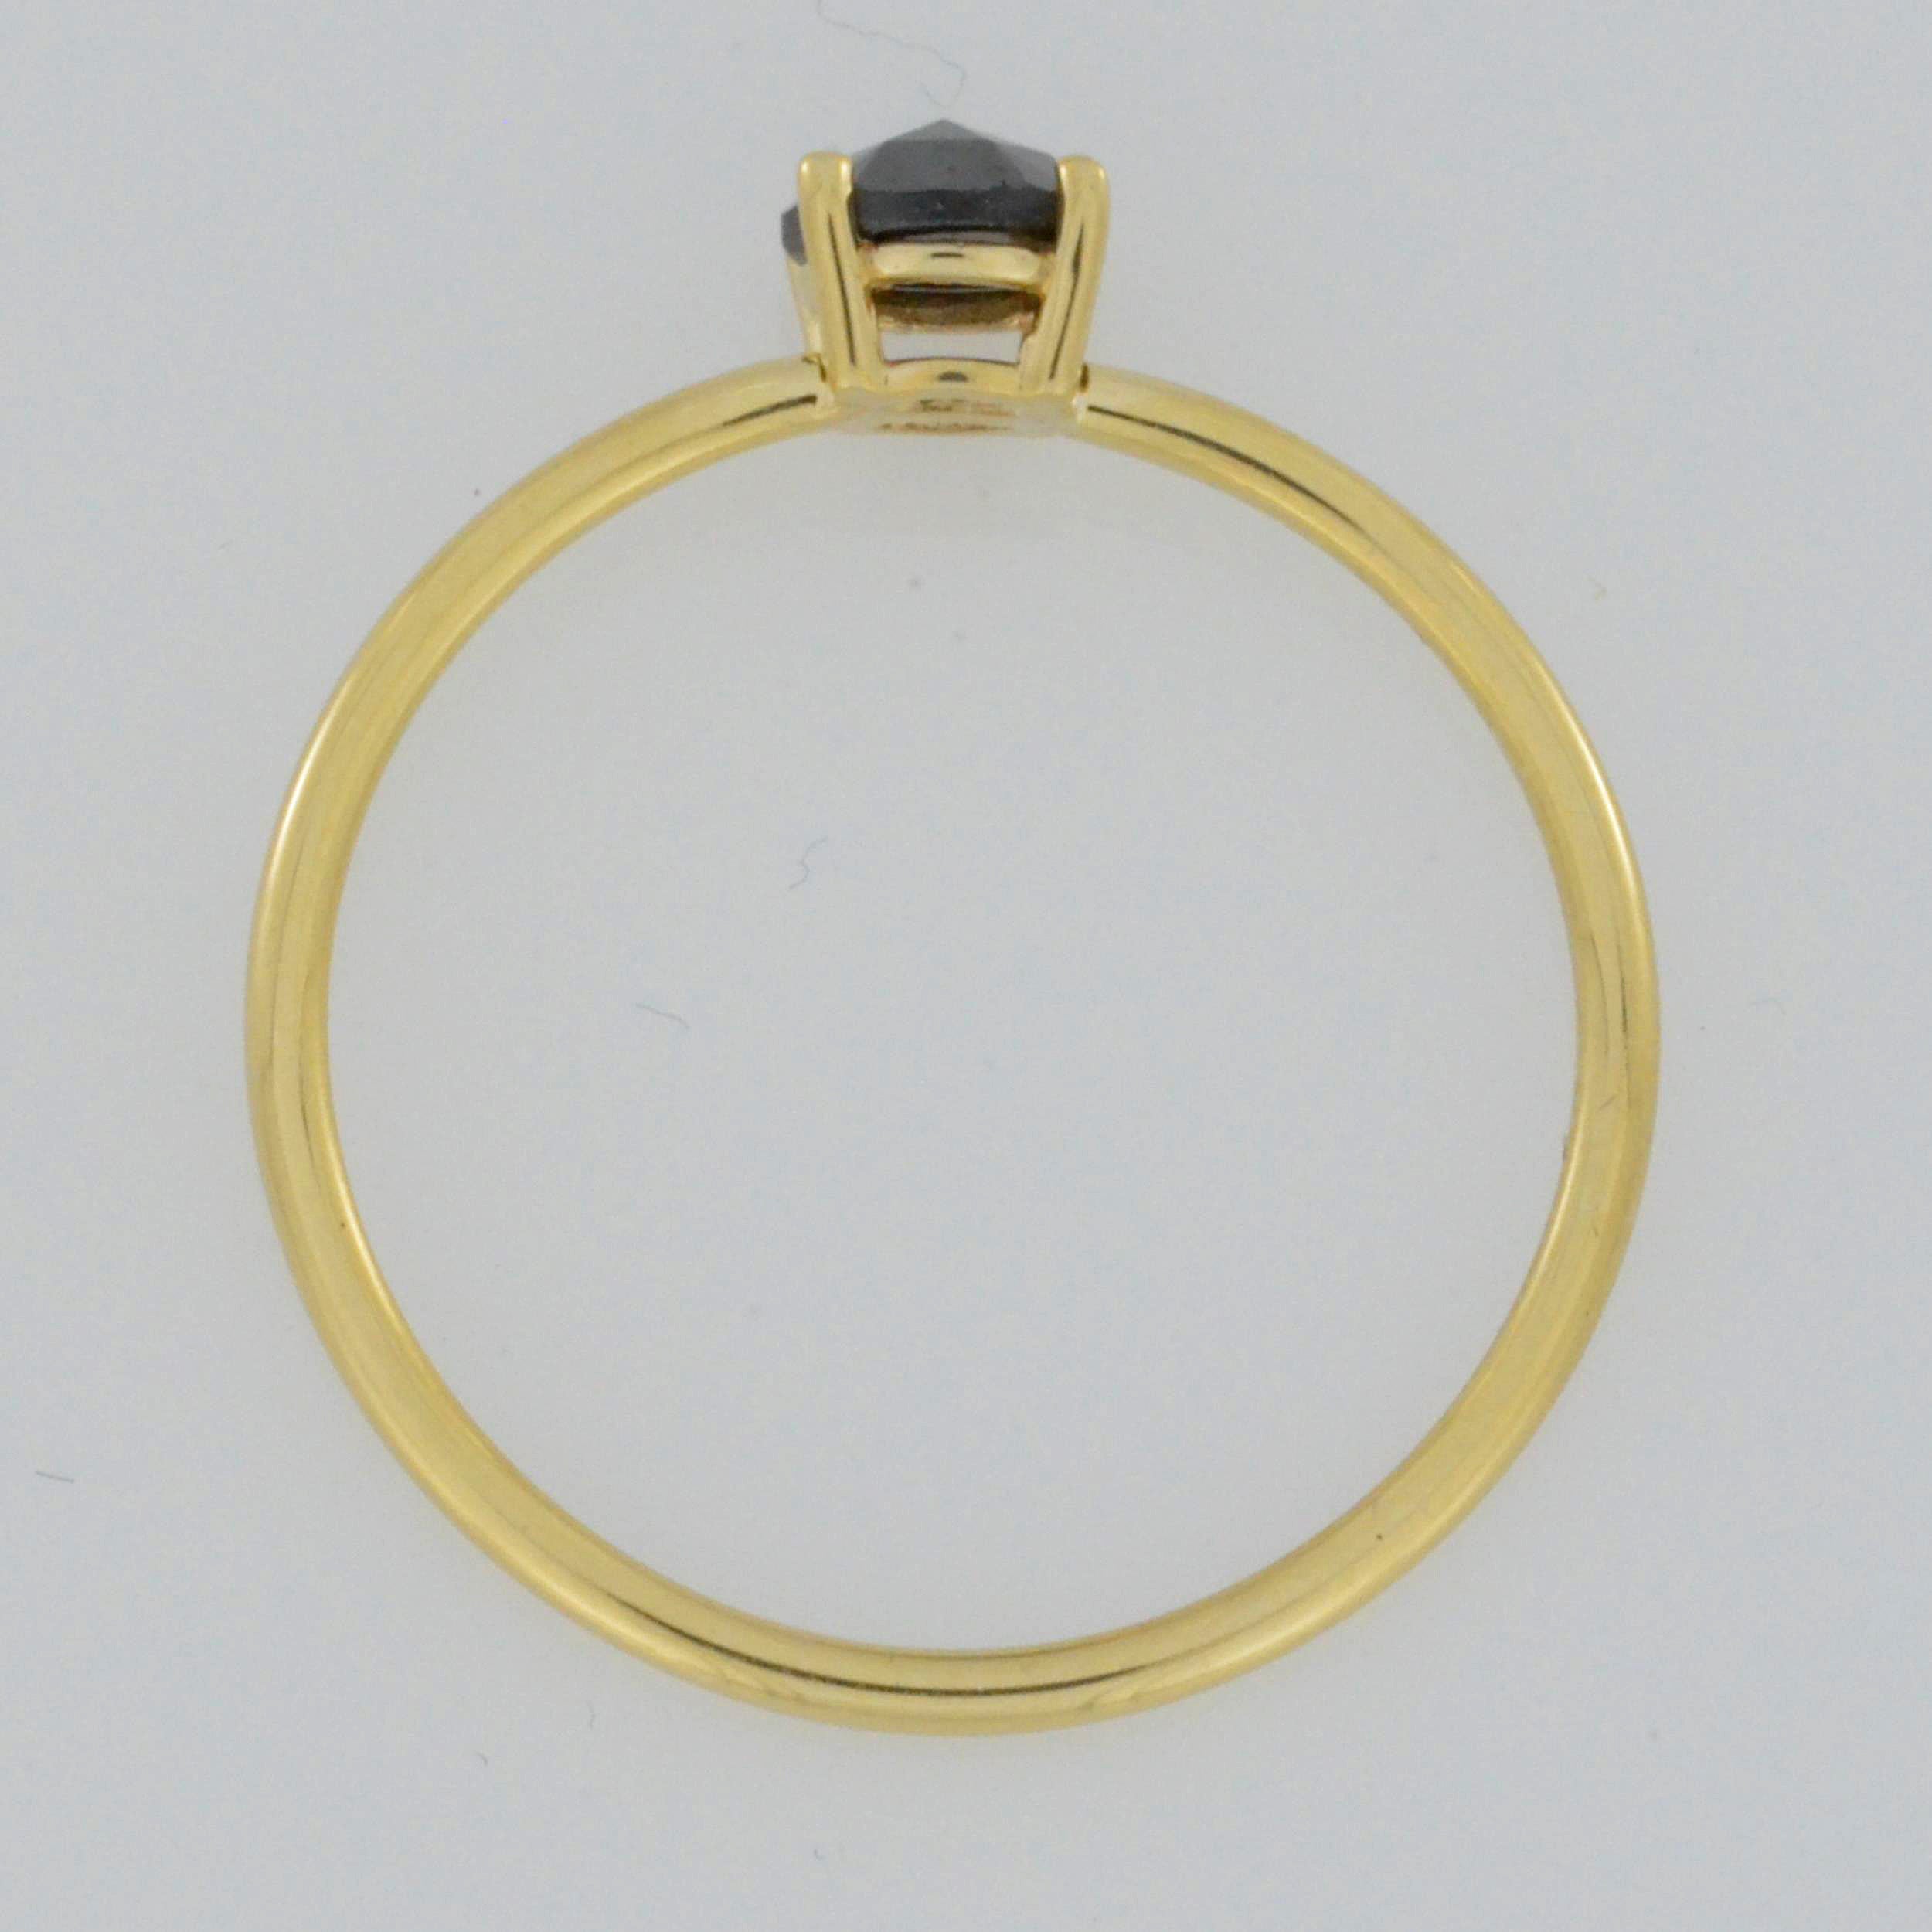 14Kt Gold 0.70 Ct Natural Rose Cut Black Diamond Ring